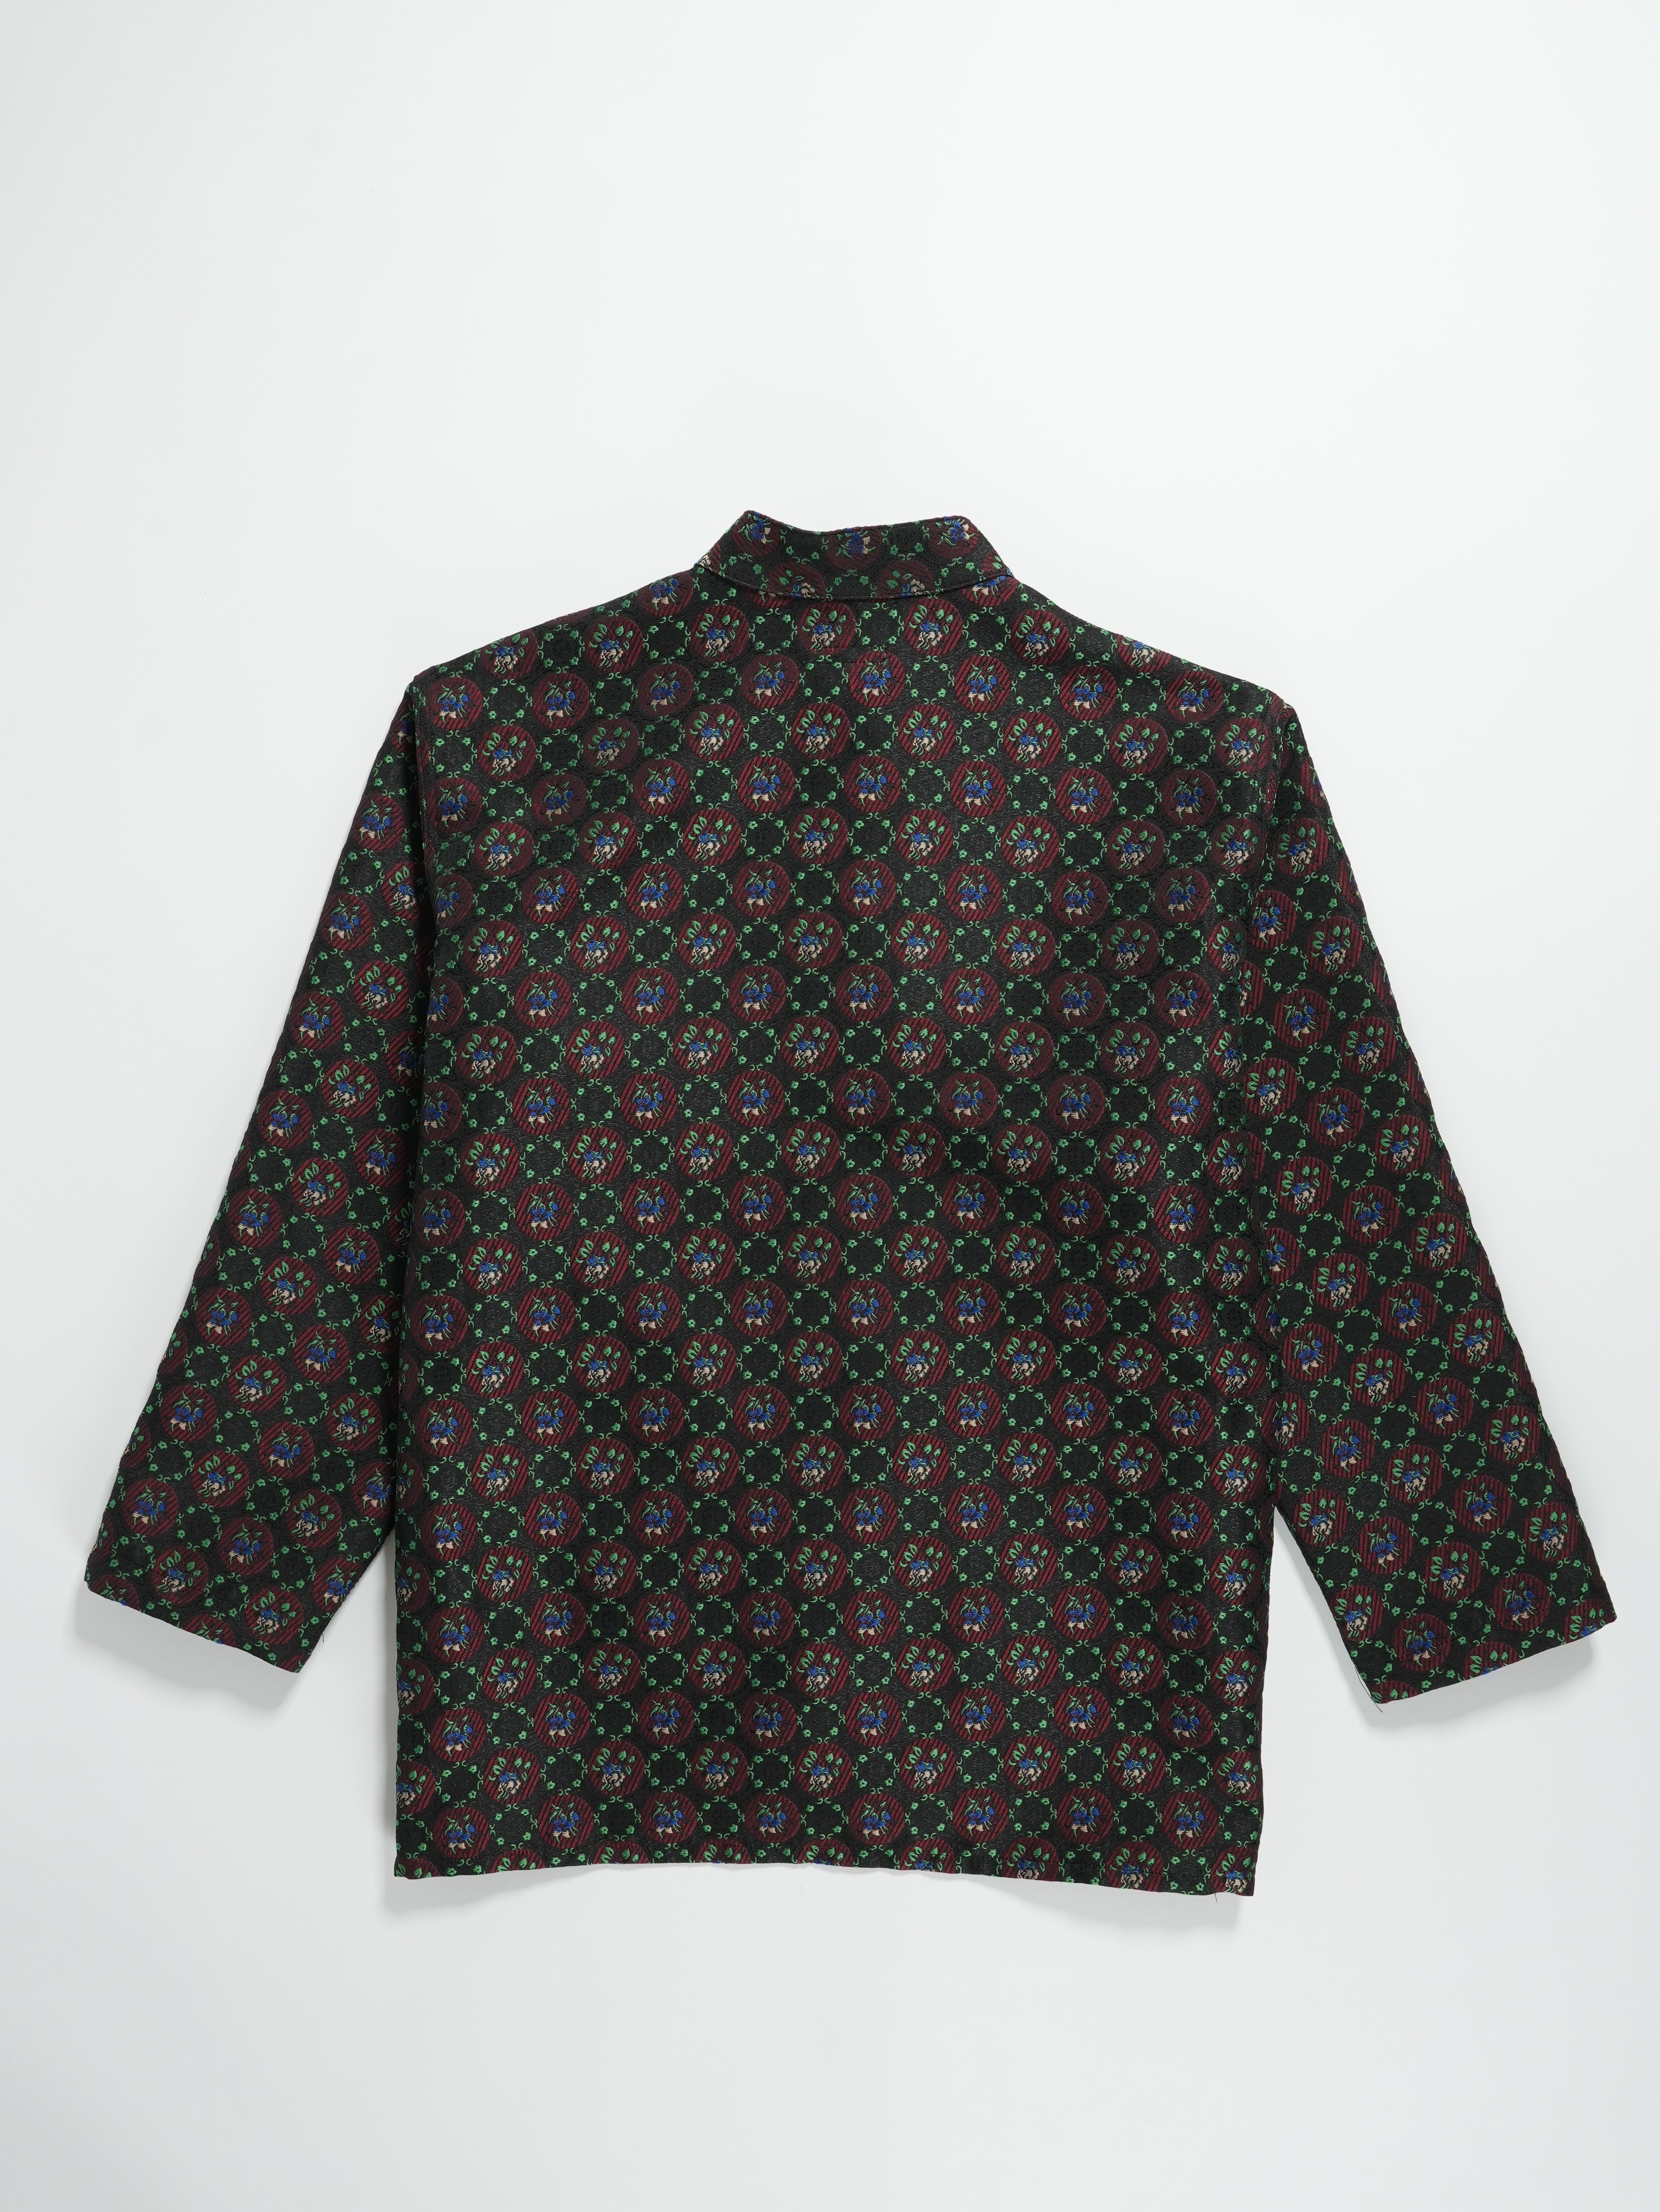 Engineered Garments Dayton Shirt - Black Polyester Floral Jacquard